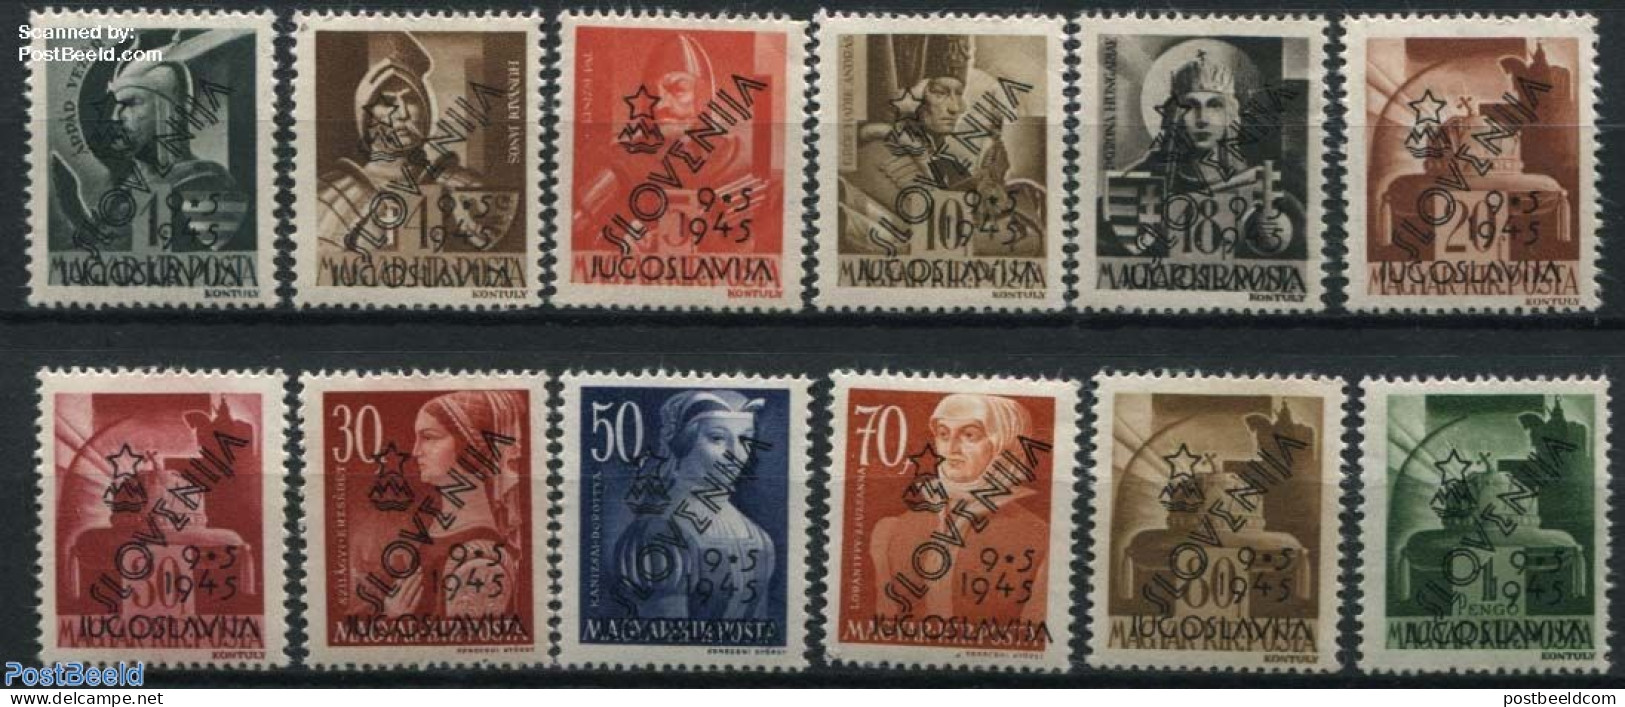 Slovenia 1945 Murska Sobota, Overprints 12v, Mint NH - Slovenia